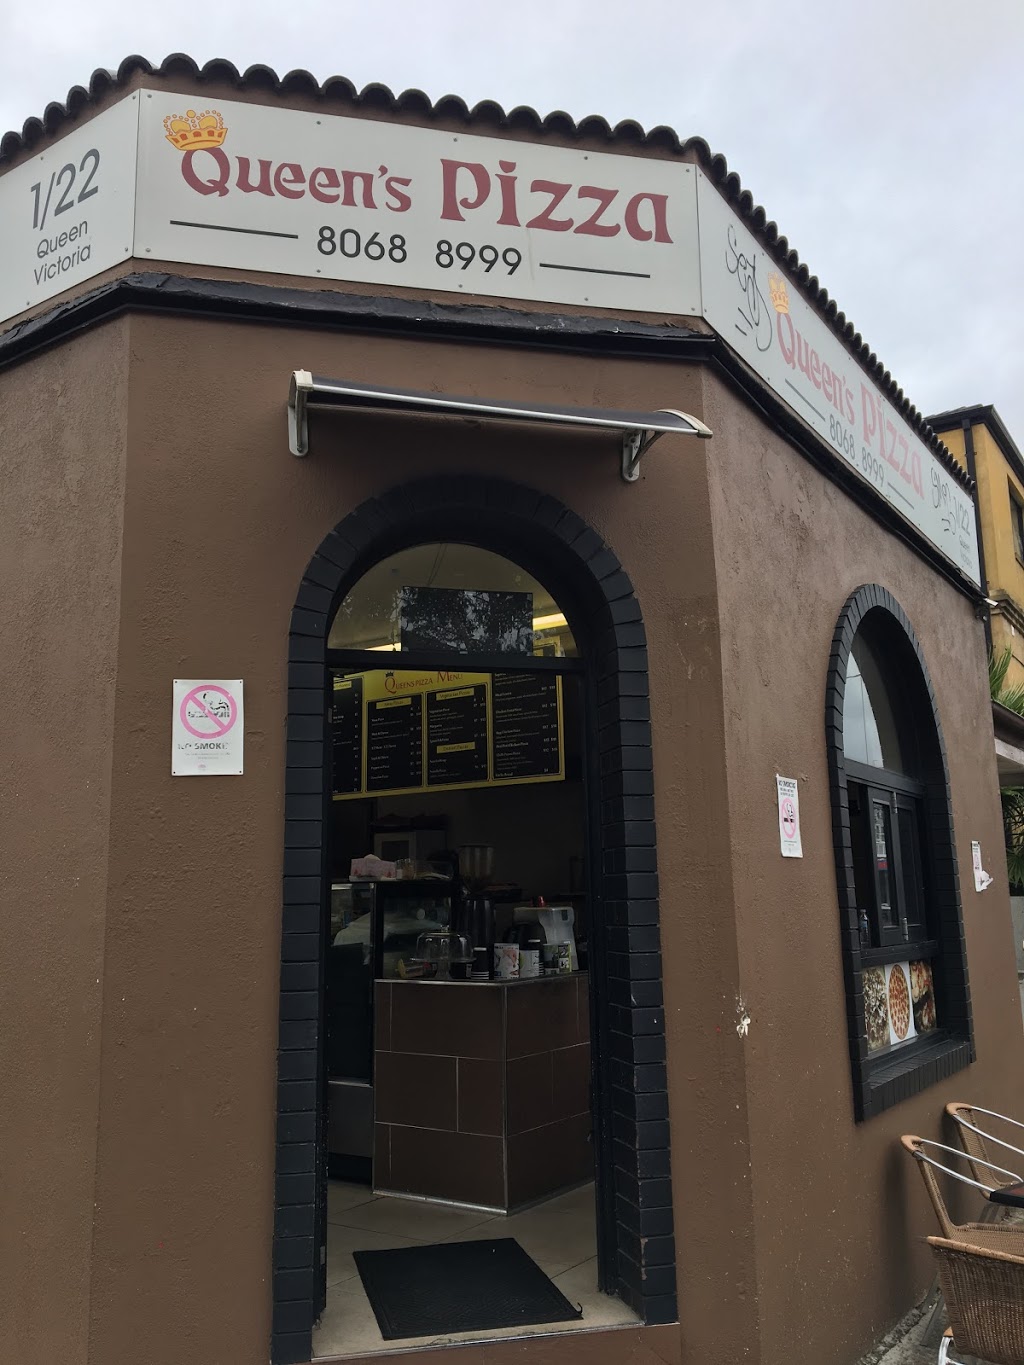 Queens Pizza | 1/22 Queen Victoria St, Kogarah NSW 2031, Australia | Phone: (02) 8068 8999